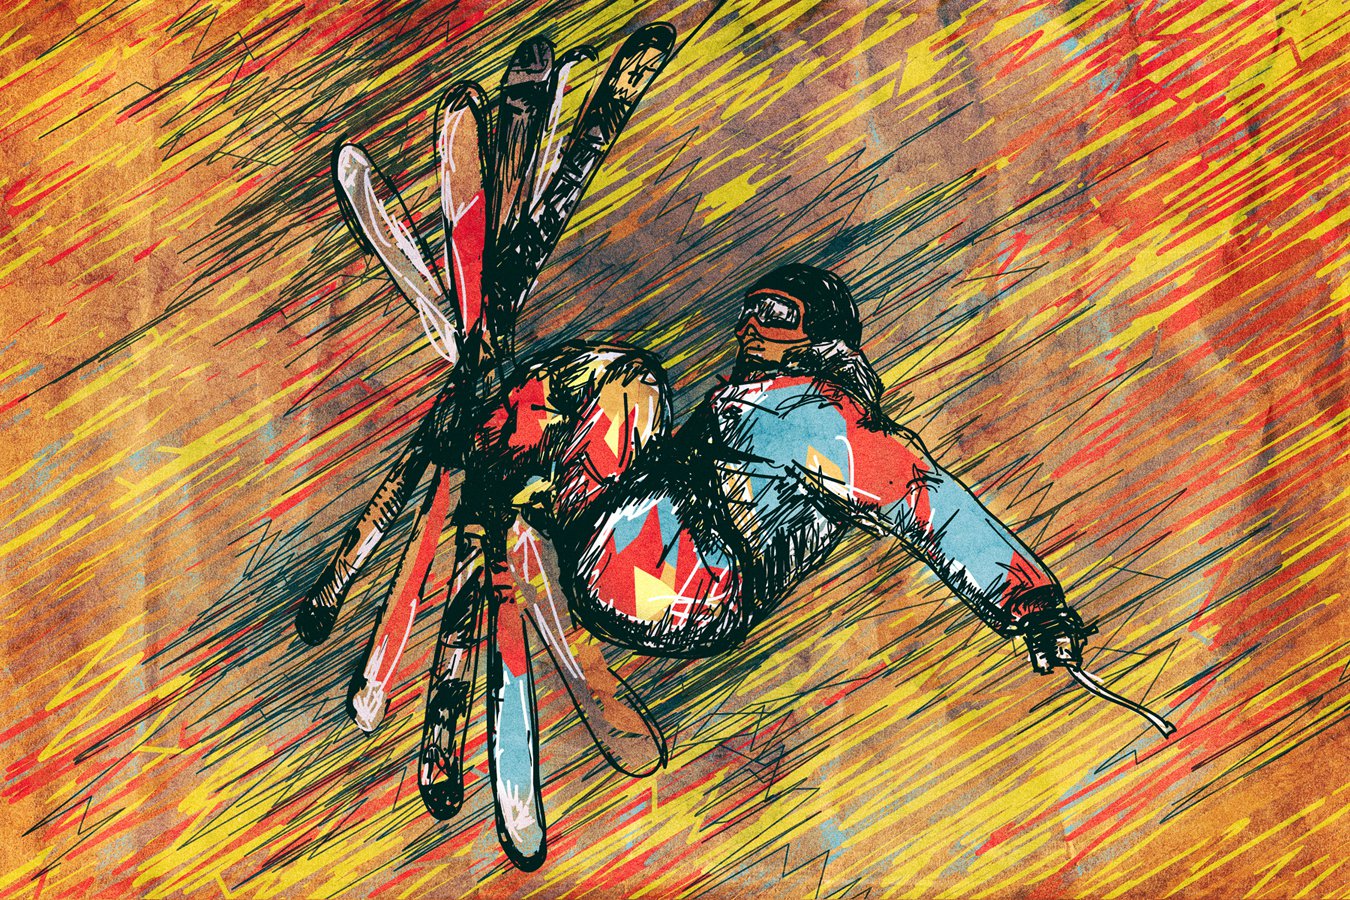 Skier based off of Futurism Art Movement